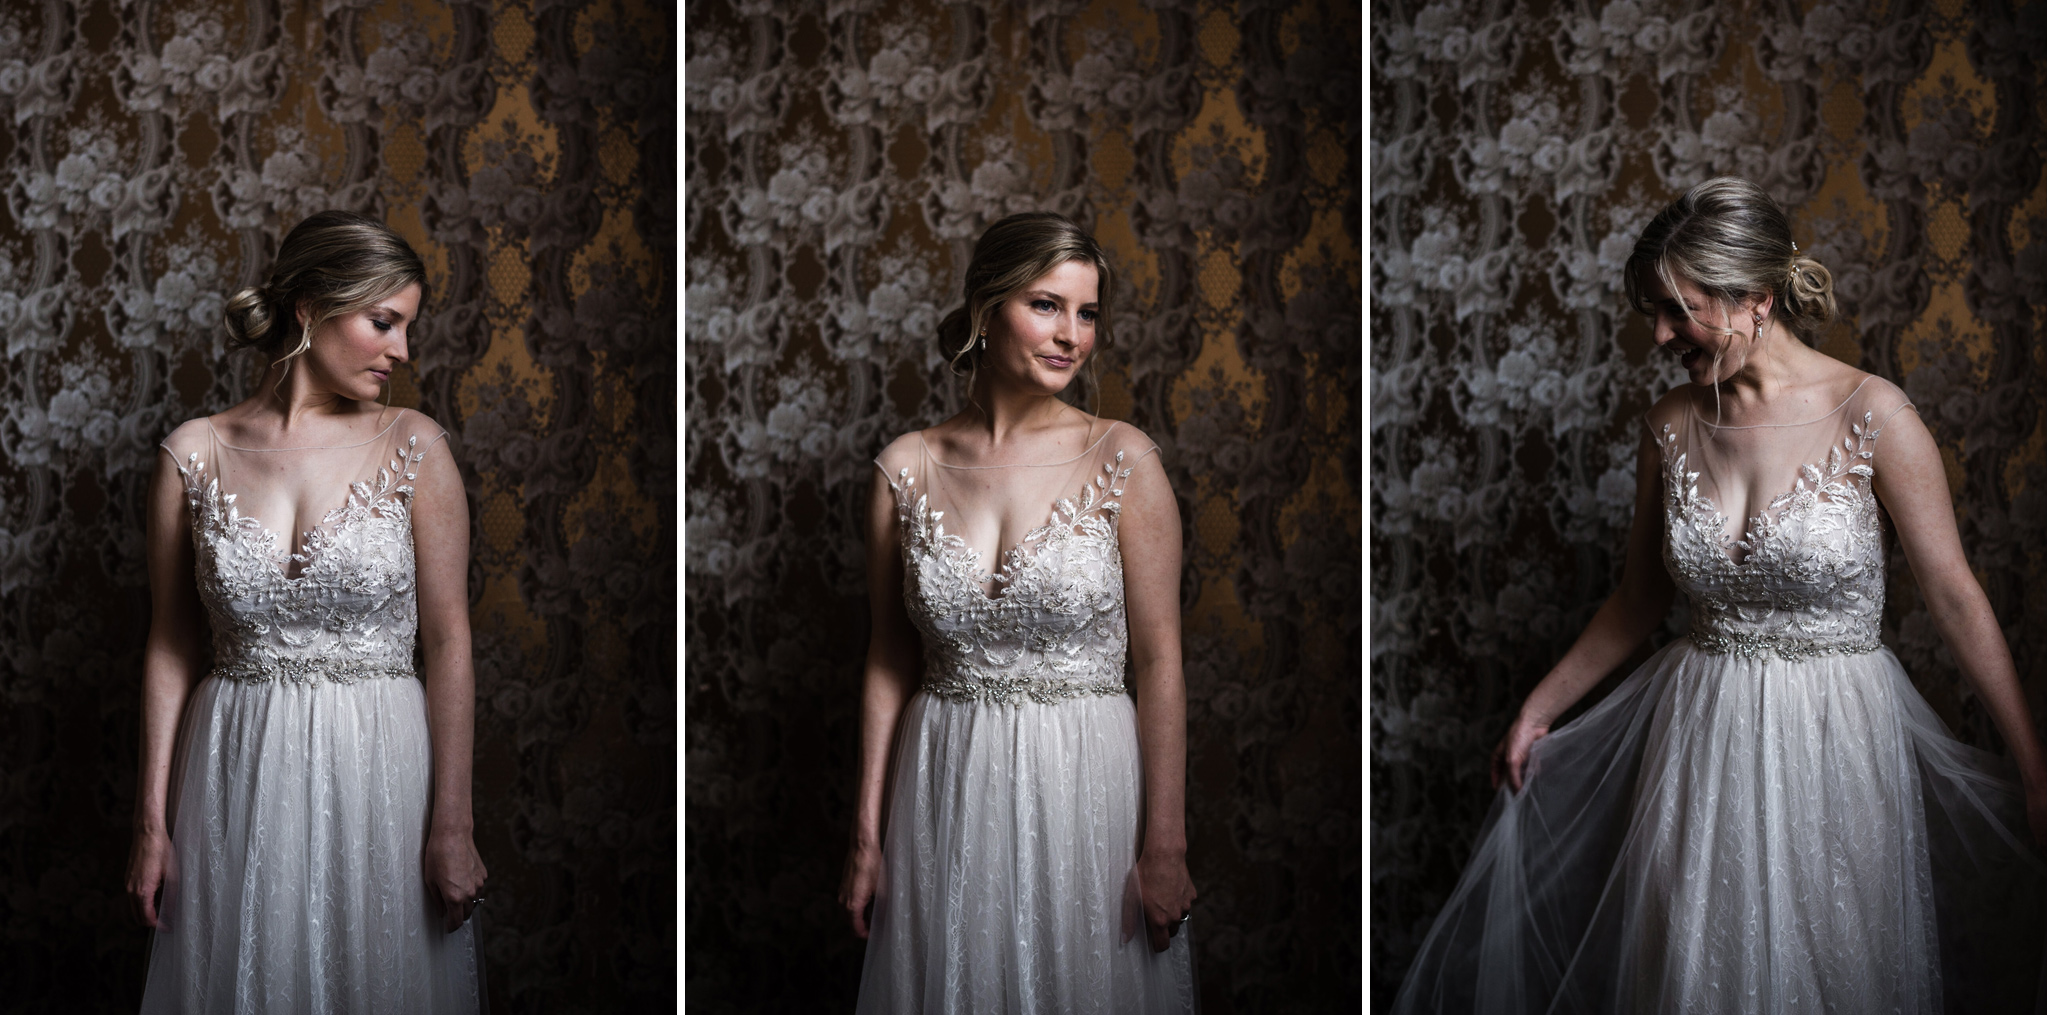 271-elegant-bride-portraits-indoors-wallpaper-toronto-photographer-penryn-park.jpg